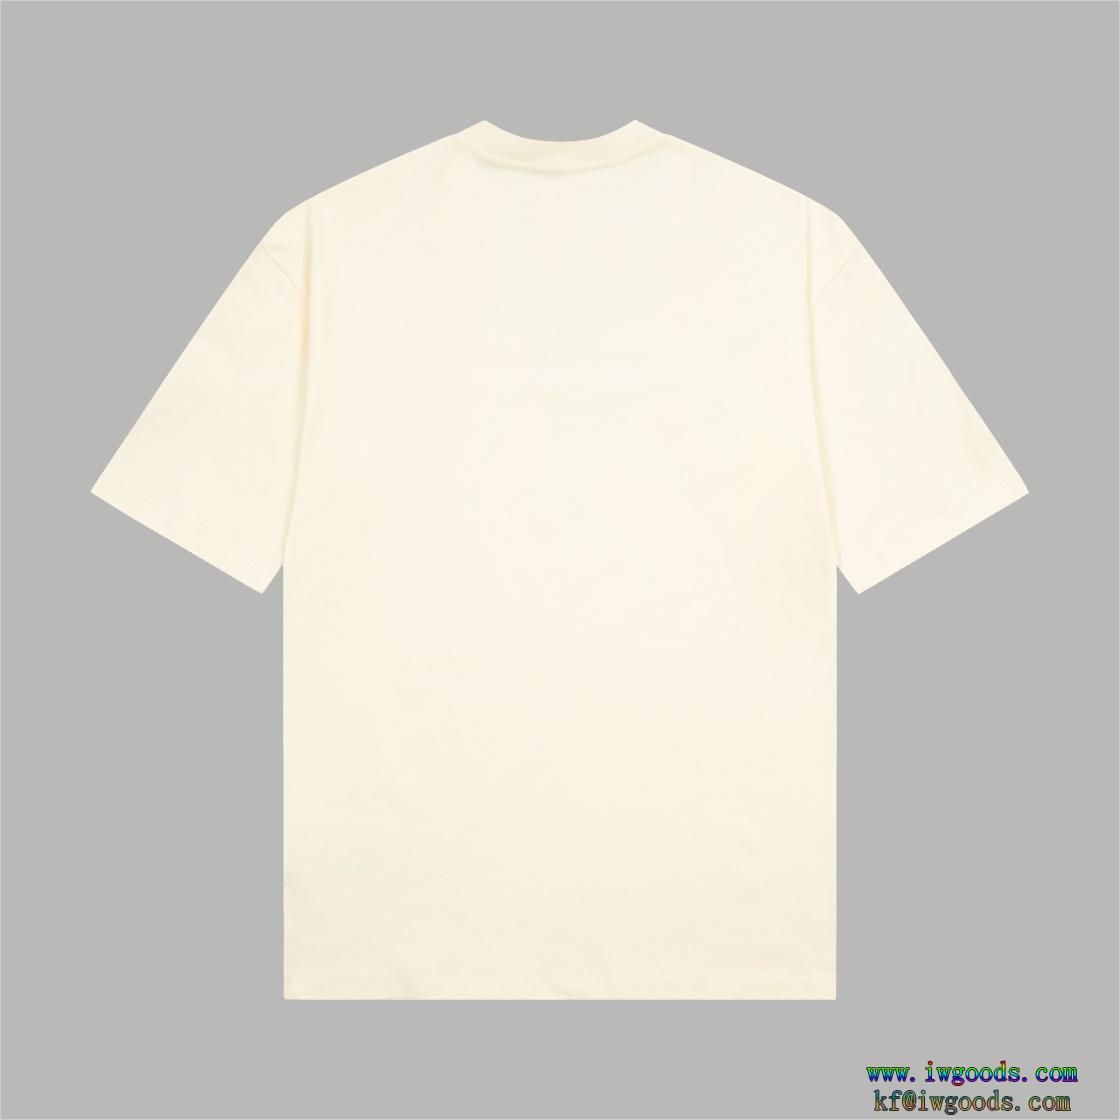 GUCC1半袖Tシャツコピー ブランド 通販,半袖Tシャツコピー 商品 販売